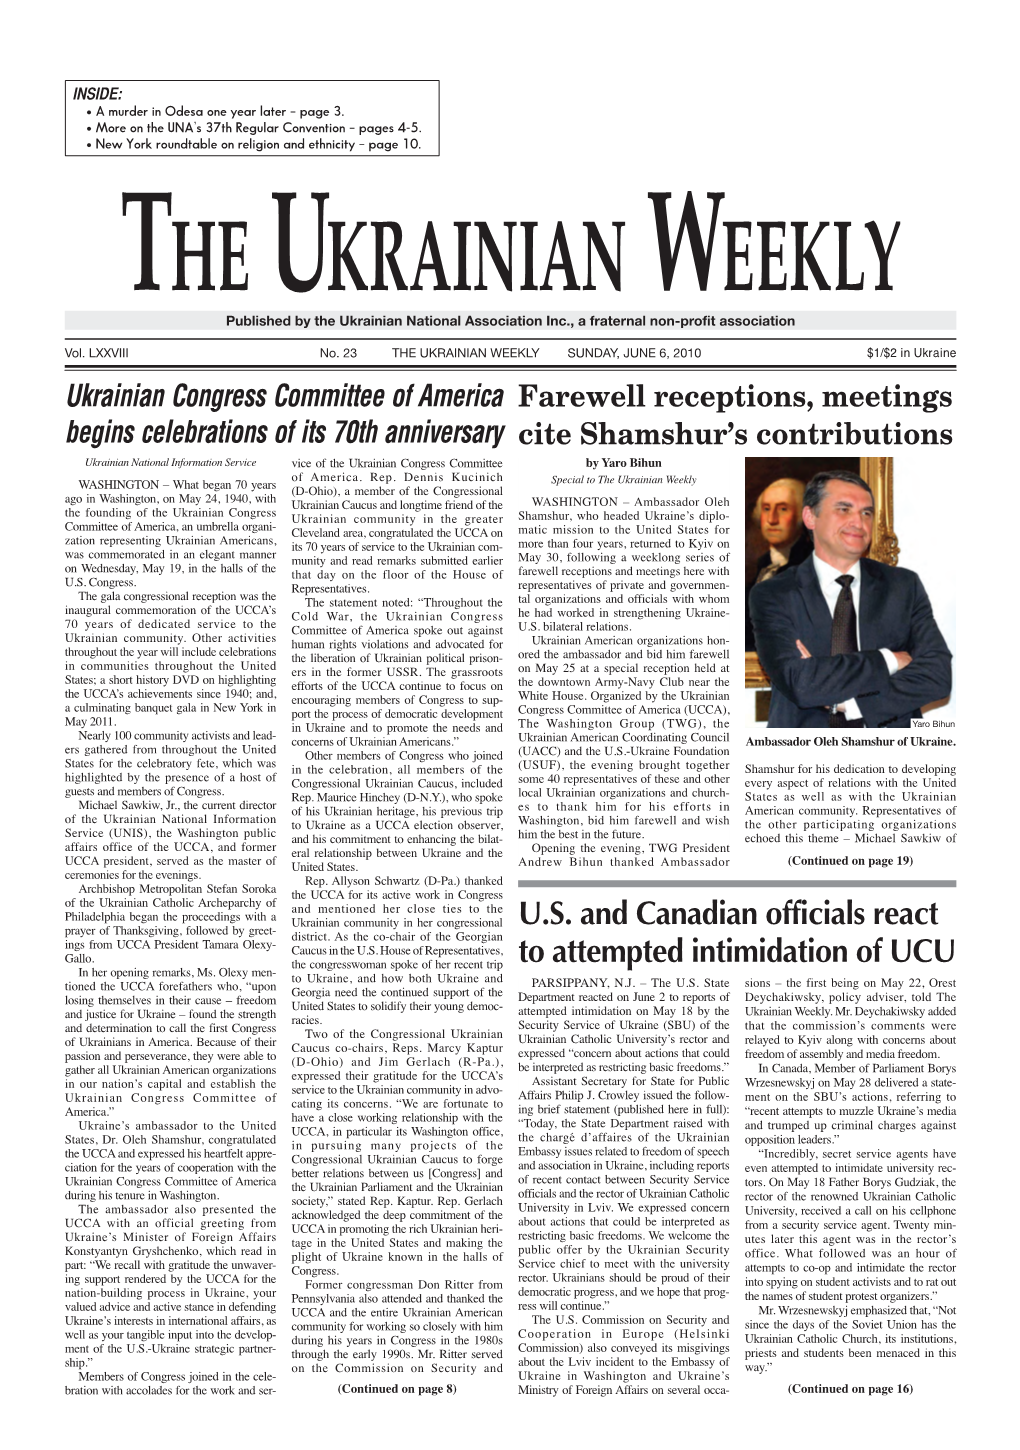 The Ukrainian Weekly 2010, No.23